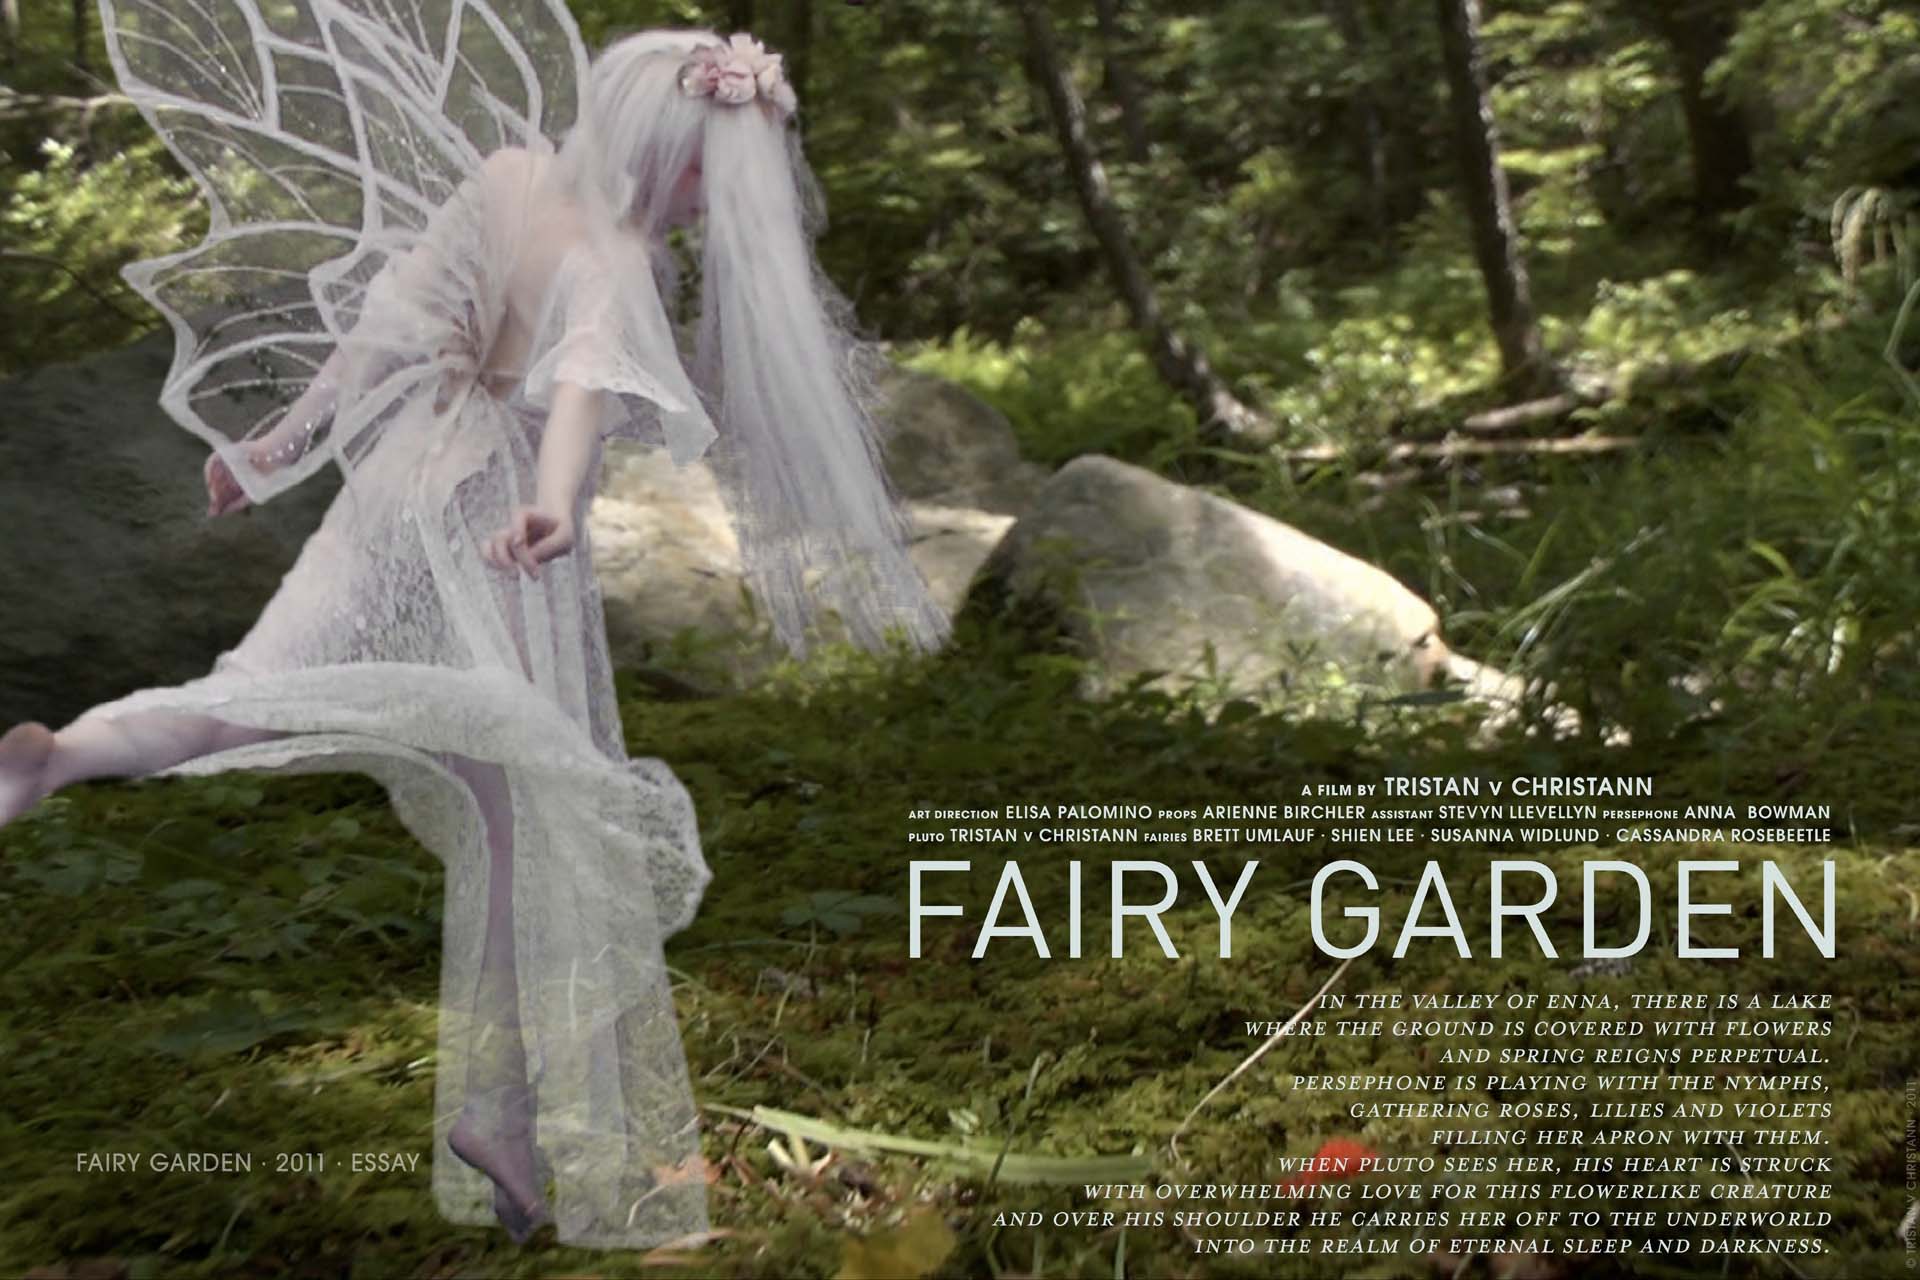 Tristan V Christann, Fairy Garden, essay, 2011, Elisa Palomino, Eternal Spring, Spring 11, Fairies, Persephone